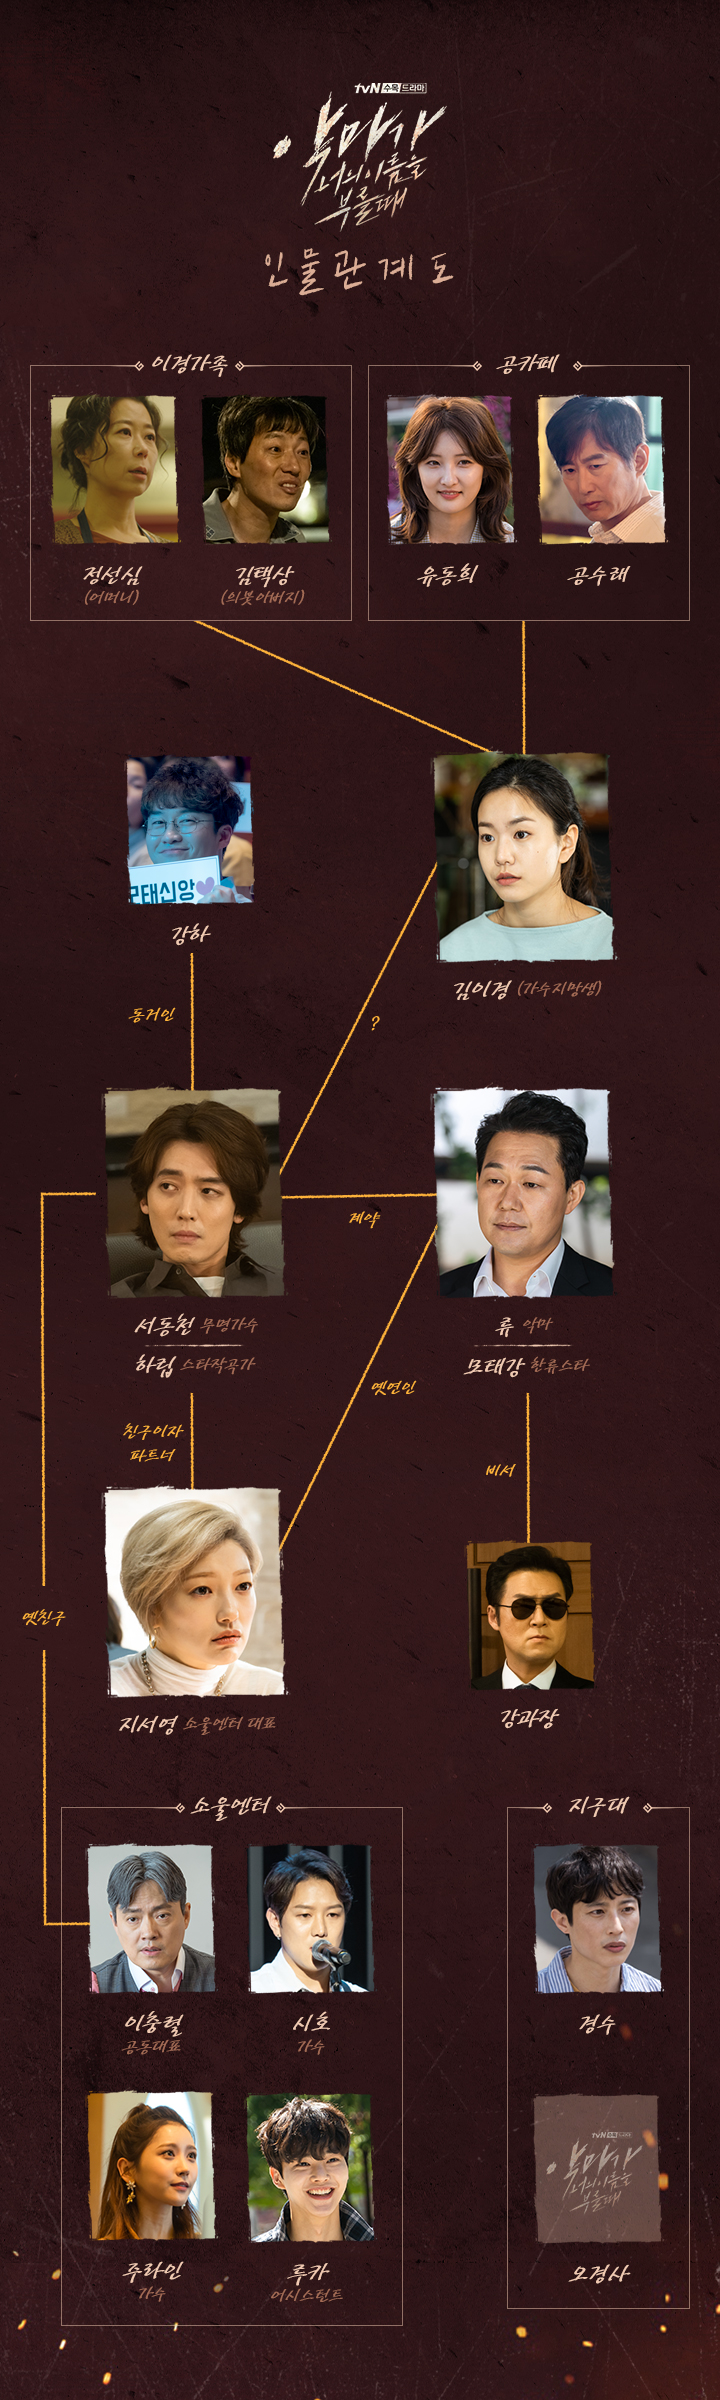 tvN드라마 '악마가 너의 이름을 부를 때(악마가(歌))' 인물관계도(출처: 공식홈페이지)